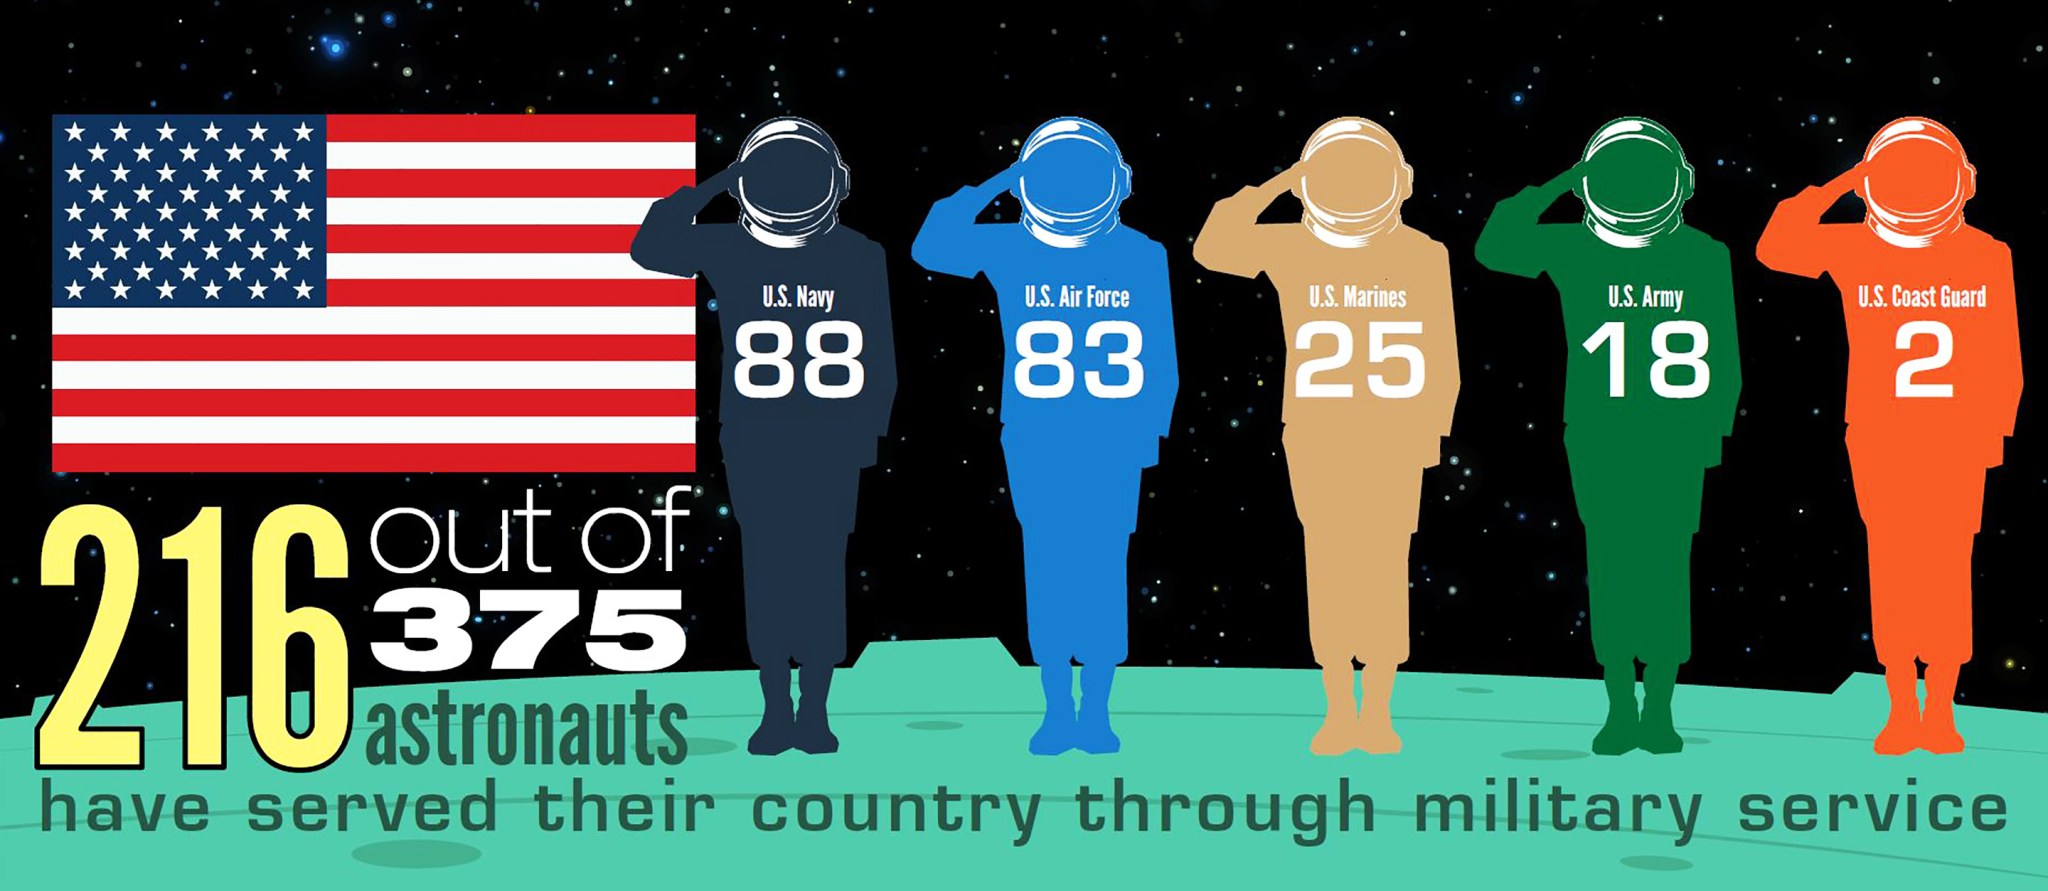 Military Astronaut Infographic